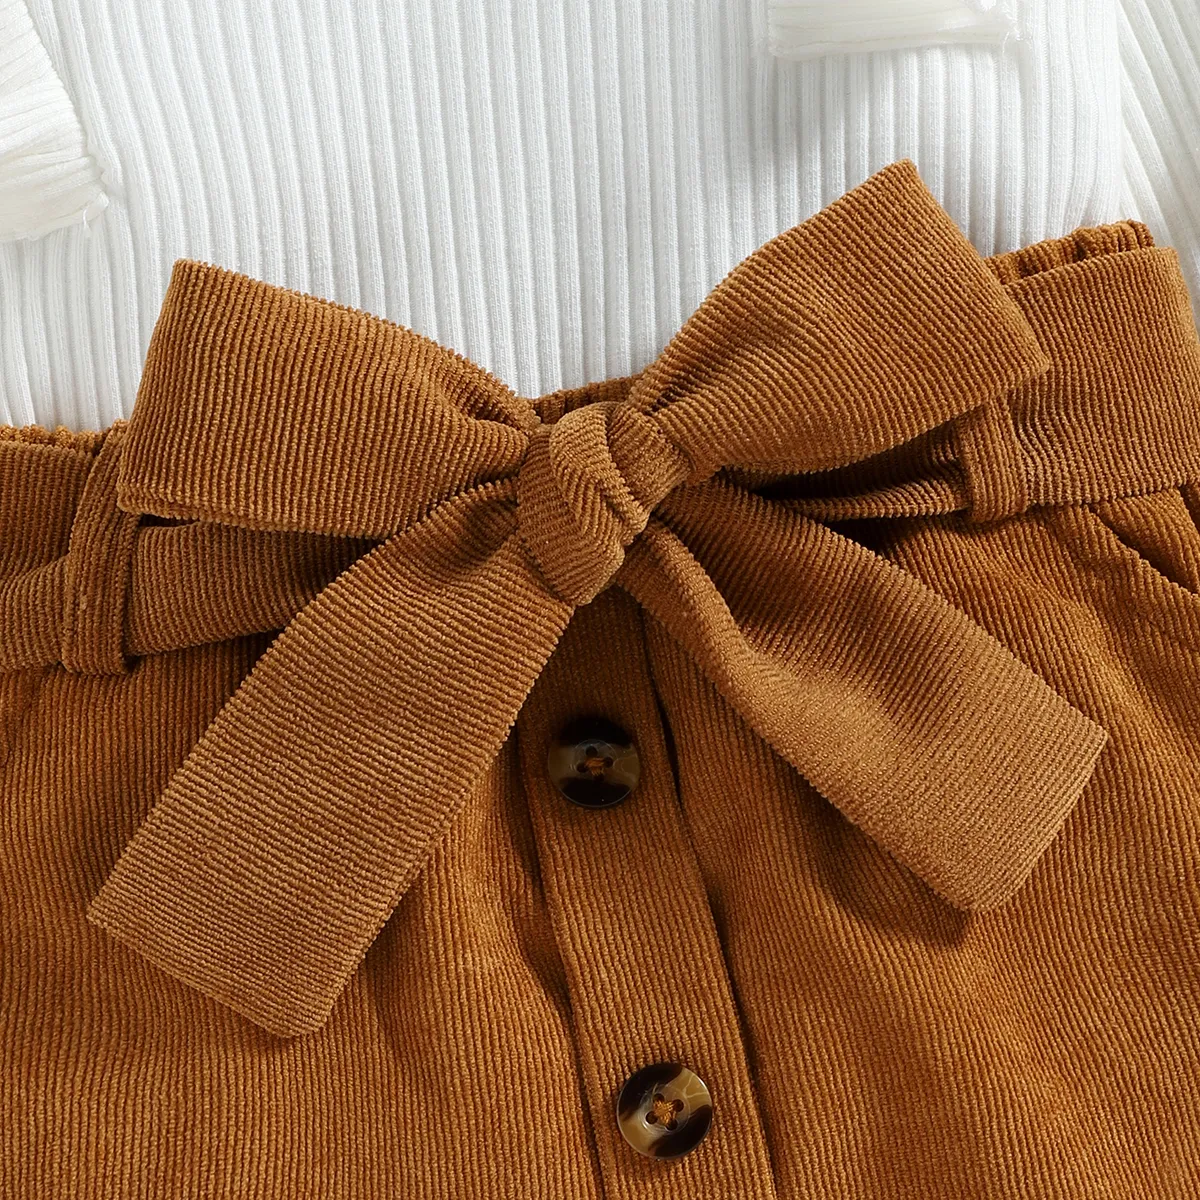 2pcs Toddler Girl Trendy Ruffled Ribbed Tee and Button Design Corduroy Skirt Set White big image 1